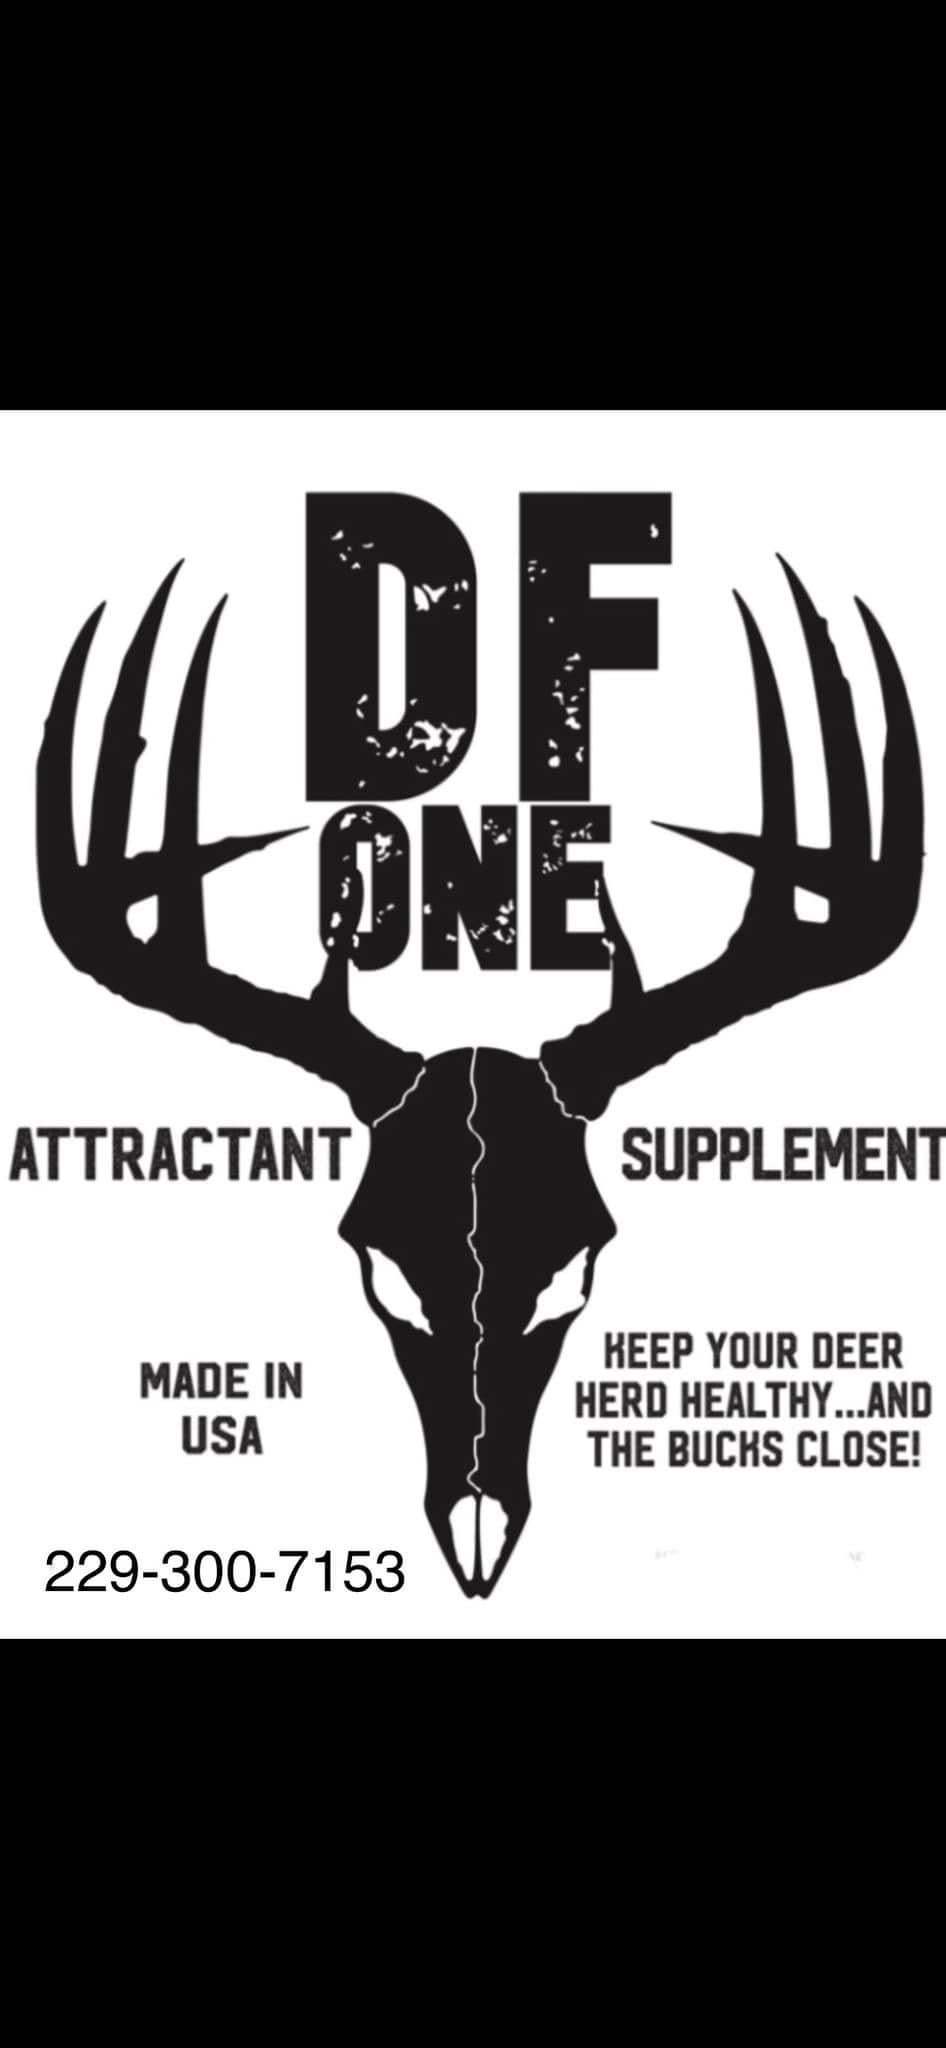 DF One Deer Attractant